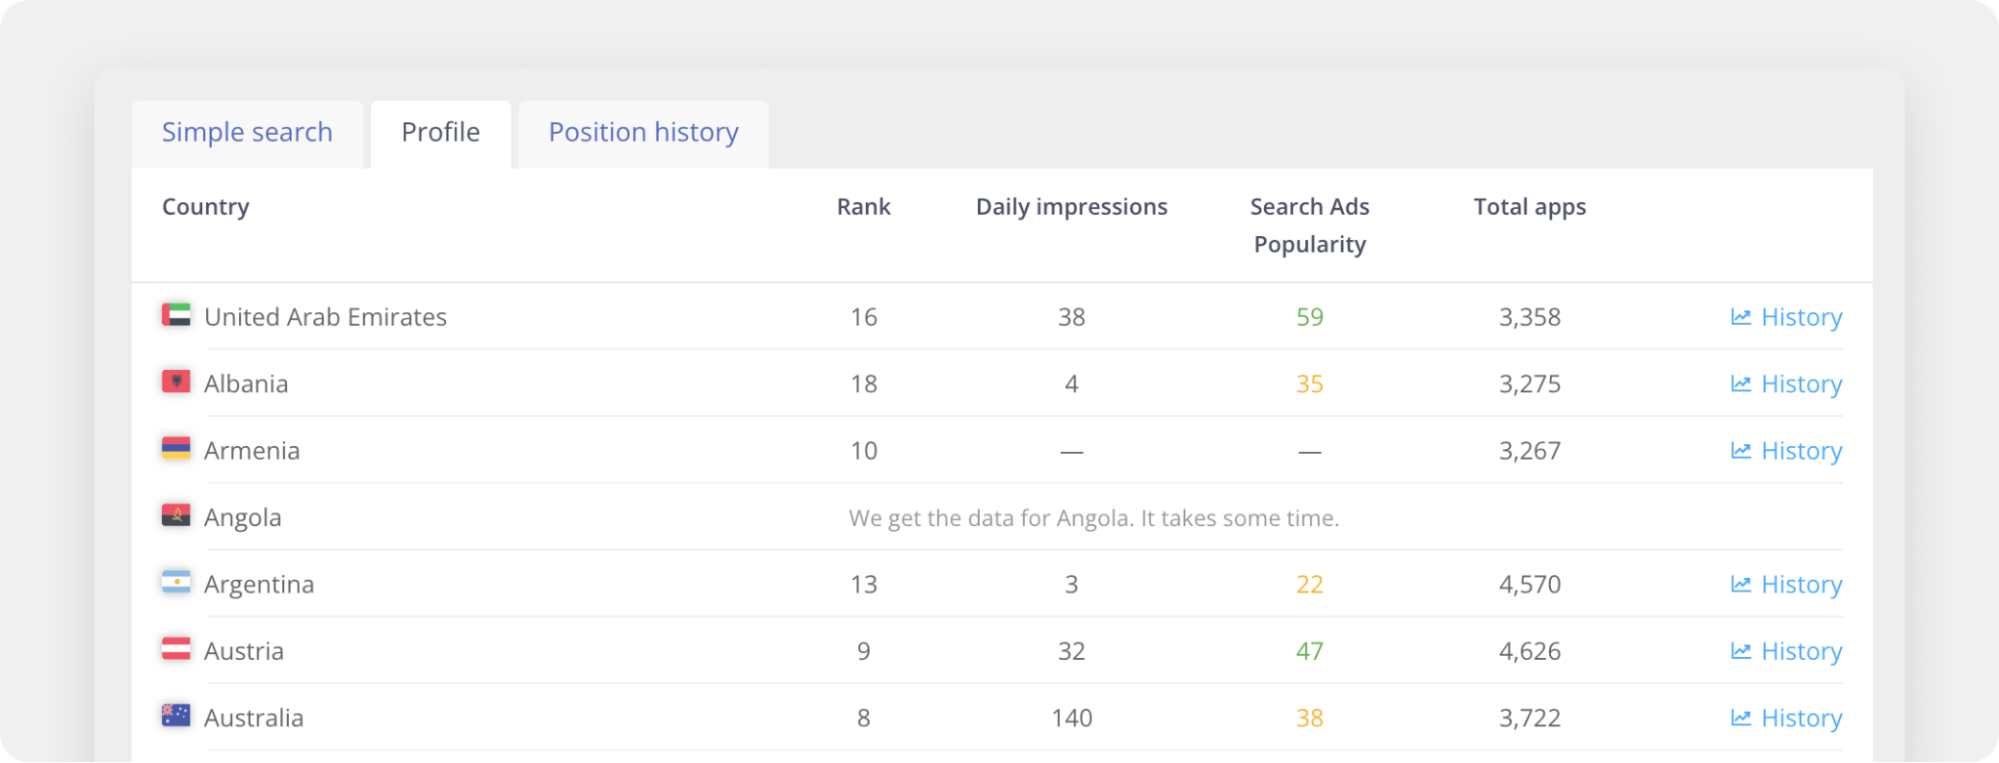 Daily Impressions, Search Ads Popularity, Rank для приложения в разных странах